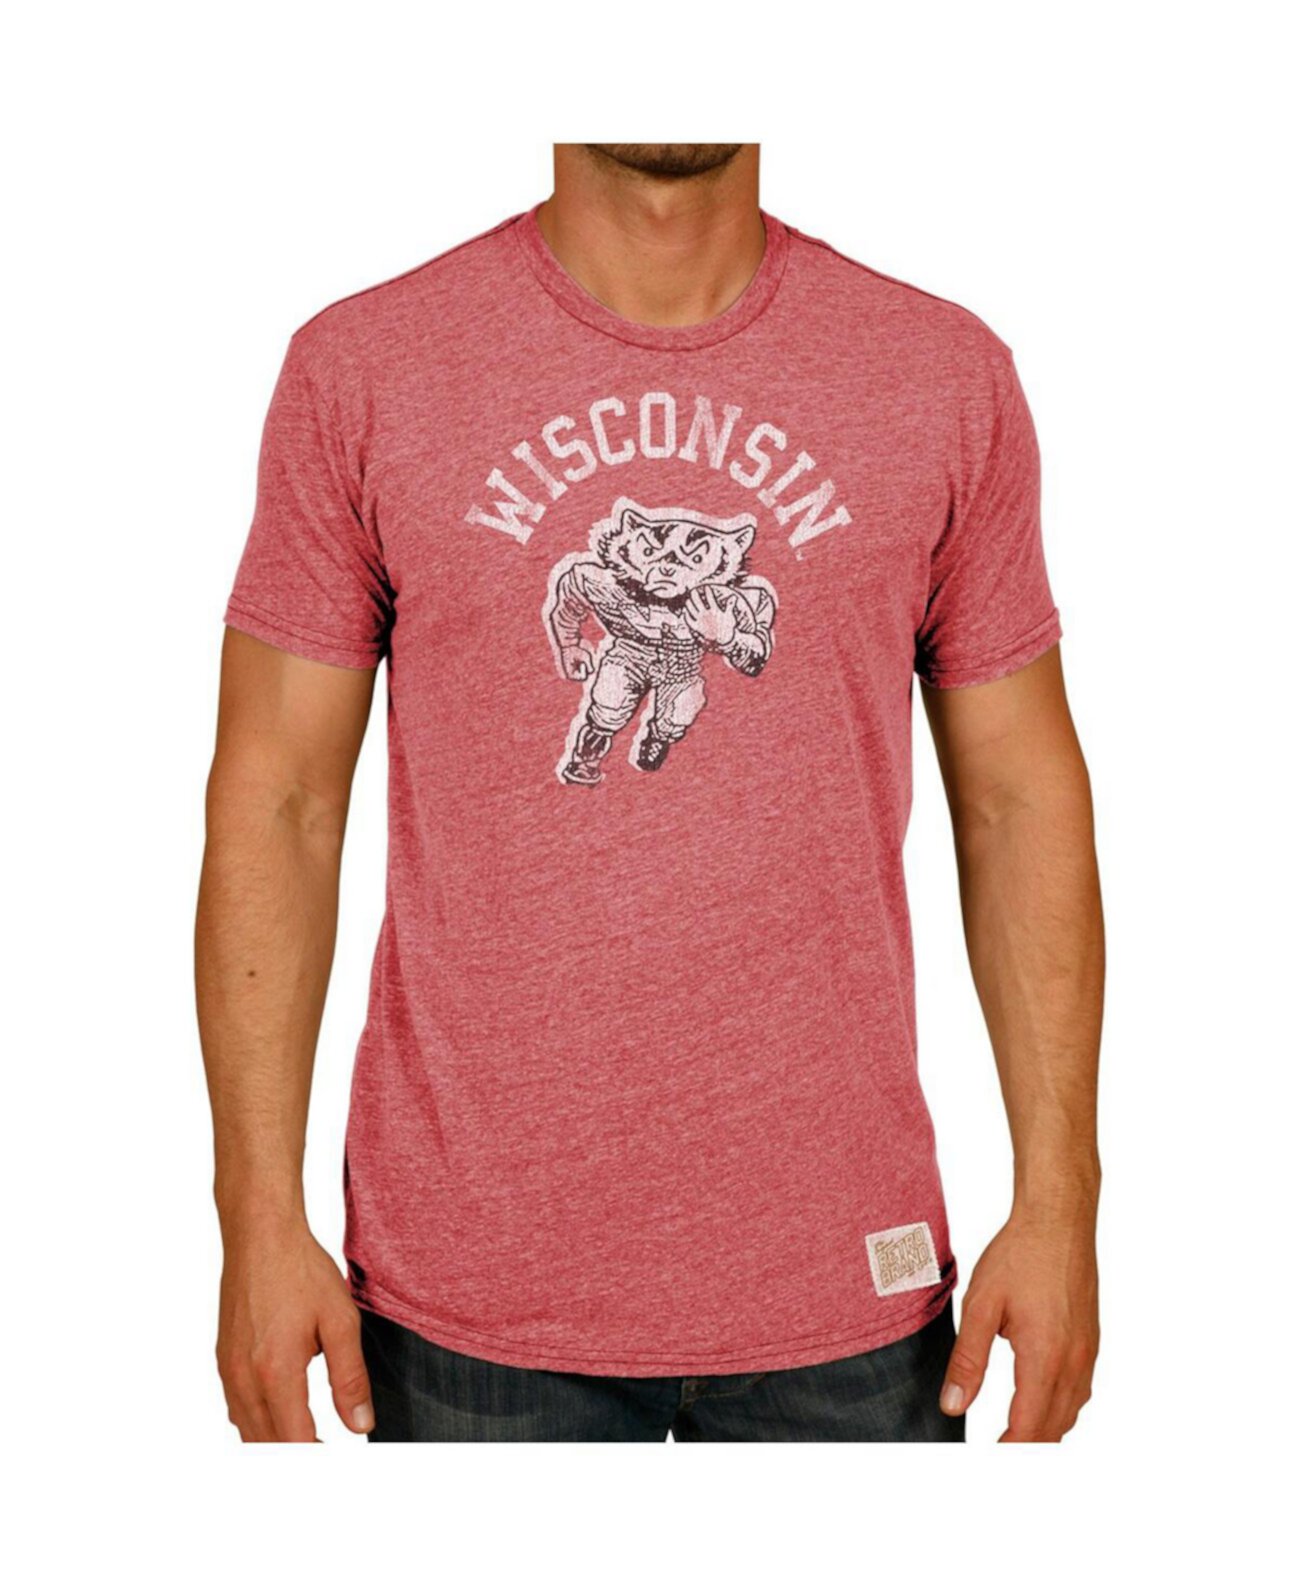 Men's Heather Red Wisconsin Badgers Vintage-Like Football Bucky Tri-Blend T-shirt Original Retro Brand